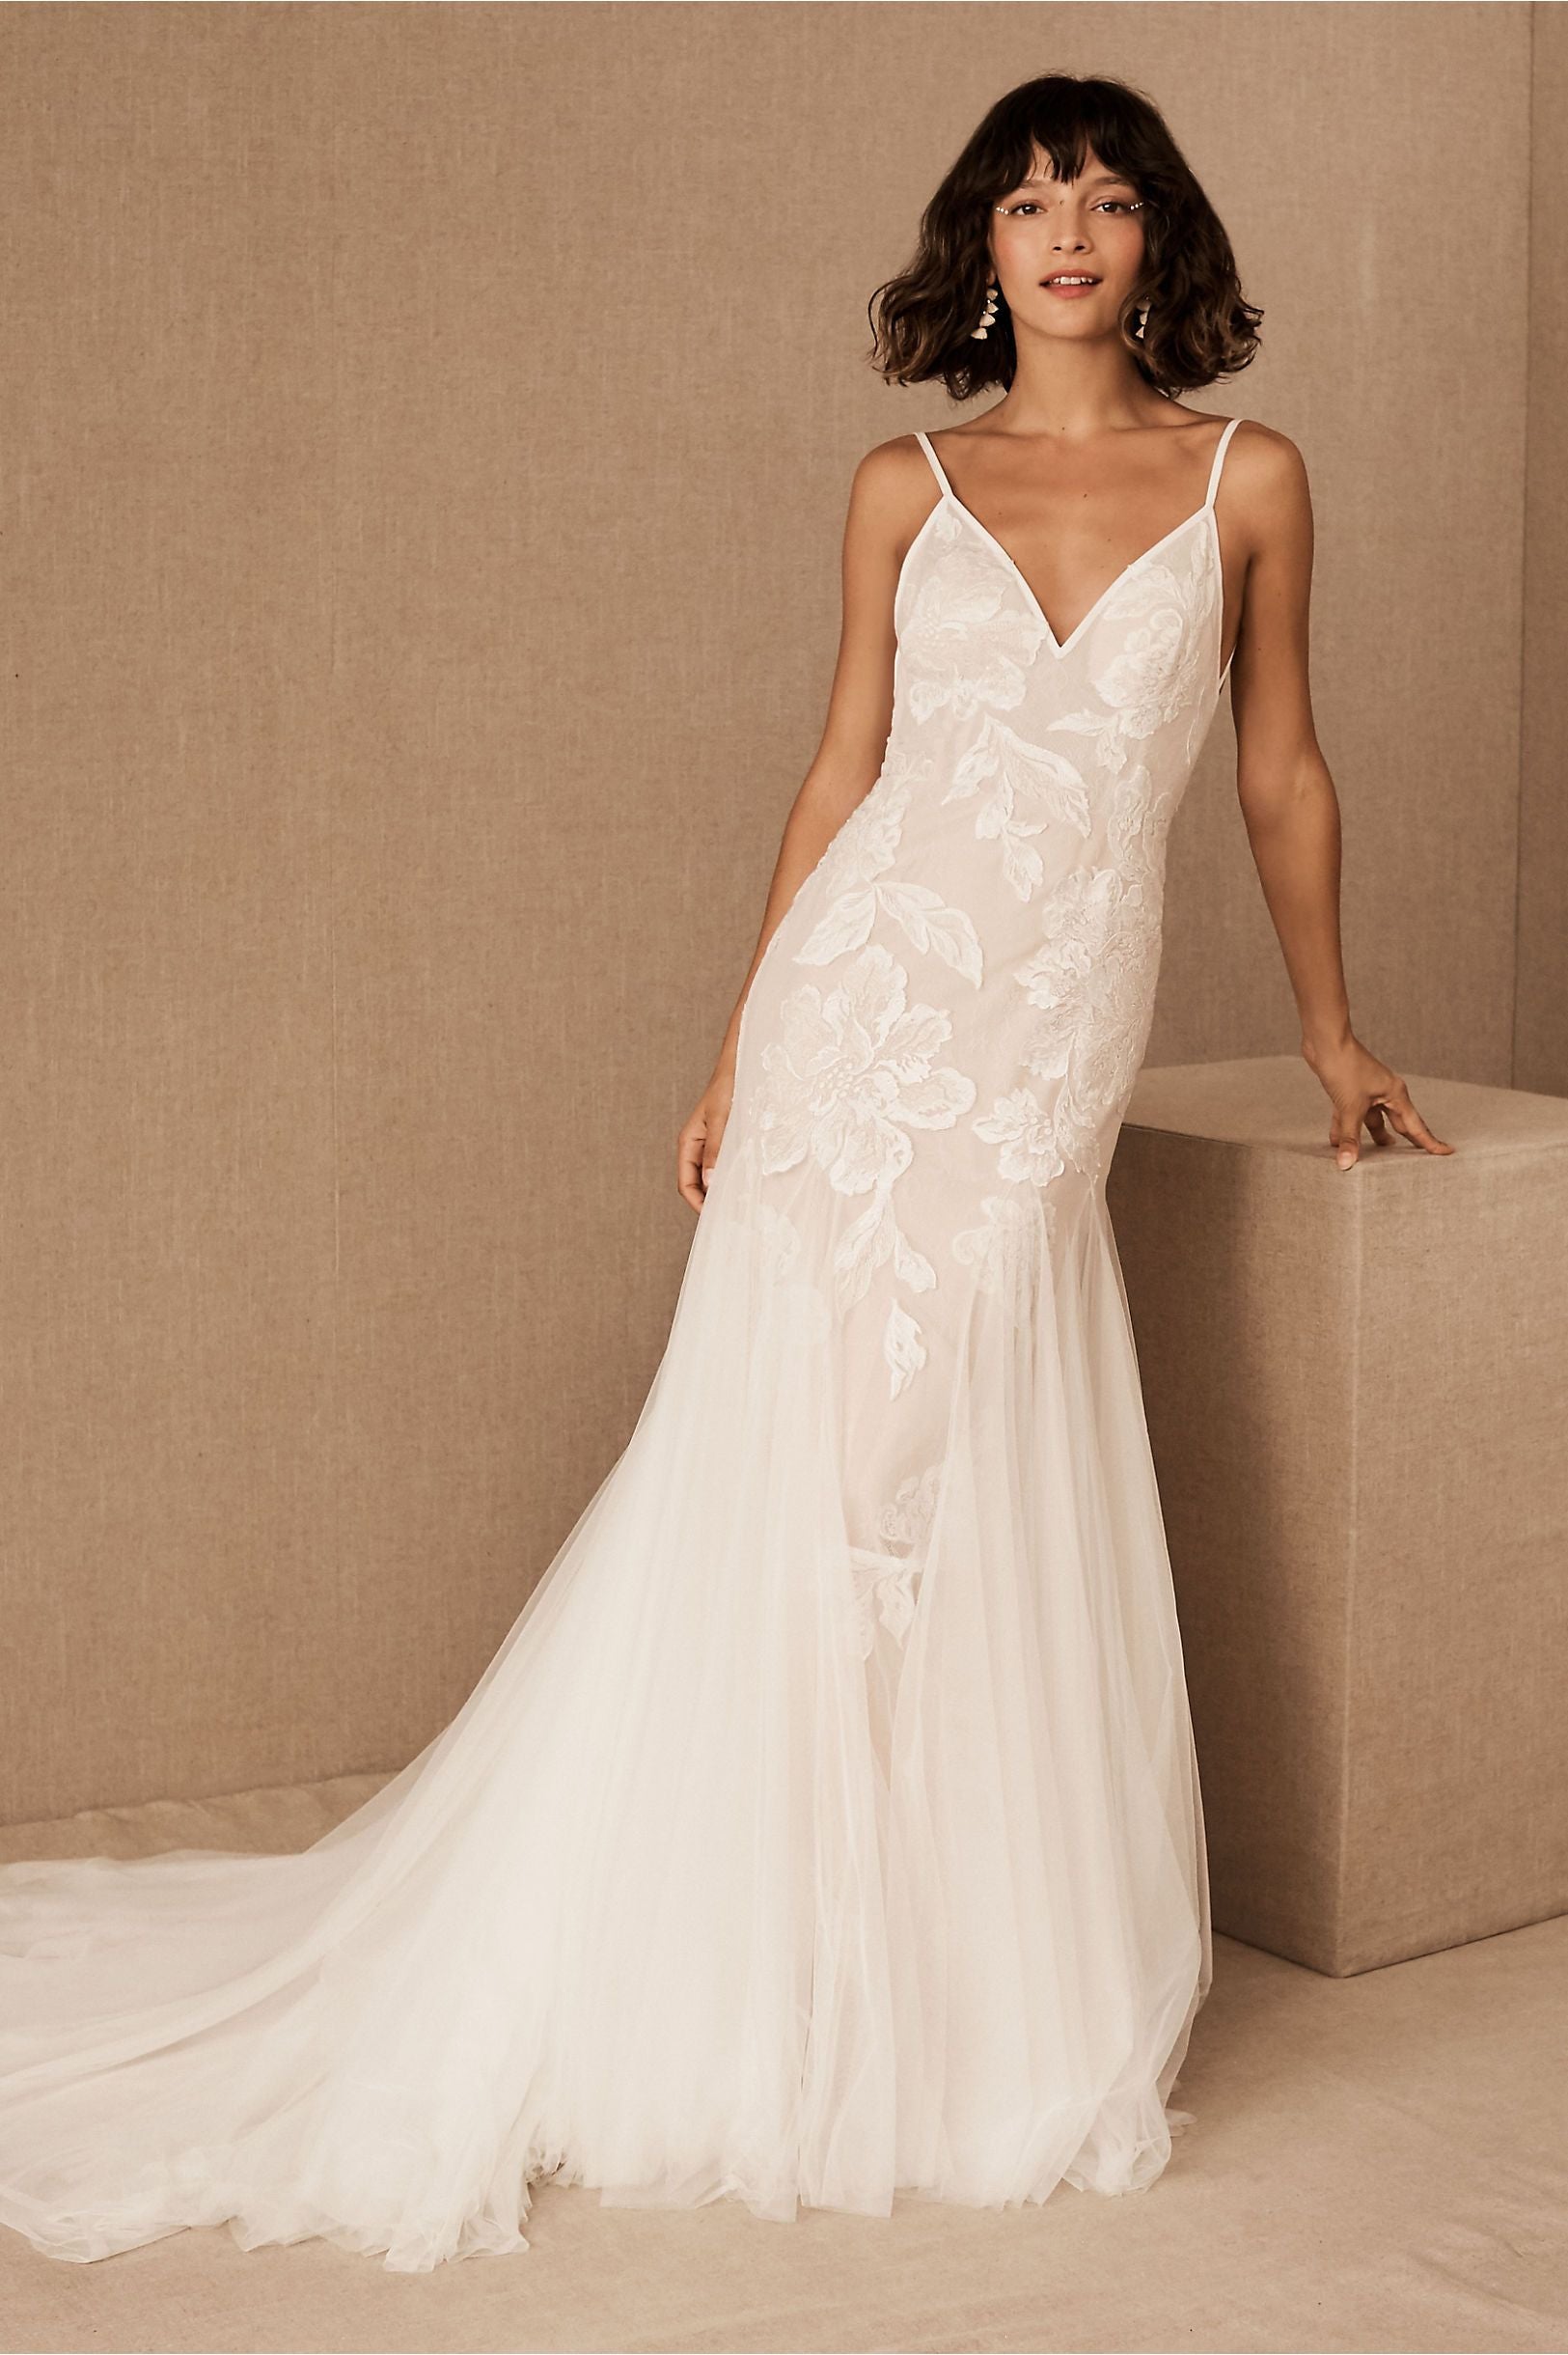 Madi Lane Bridal + Wedding Dresses｜a&bé bridal shop